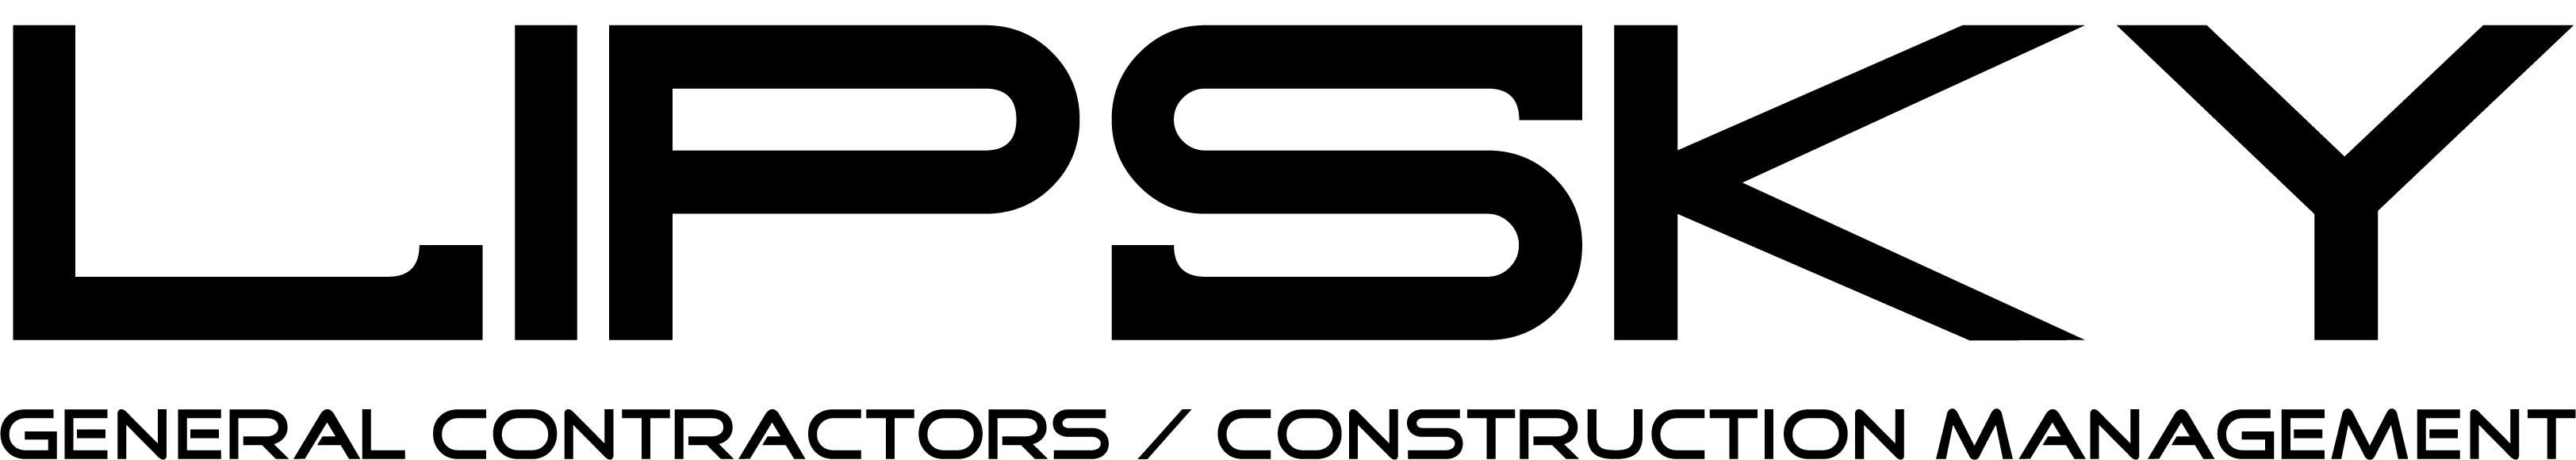 Lipsky logo (black all caps writing)